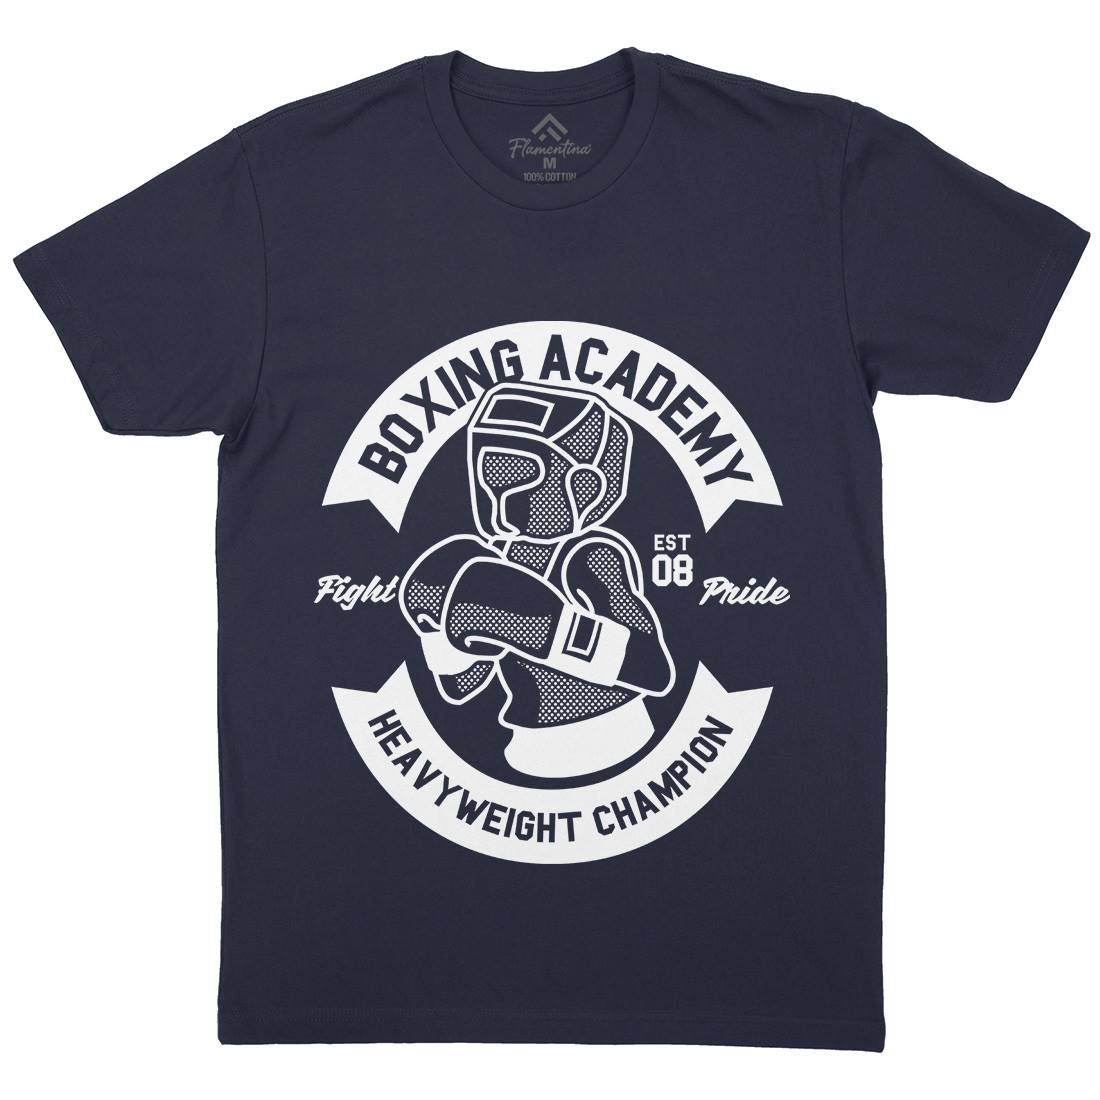 Boxing Academy Mens Crew Neck T-Shirt Gym A213